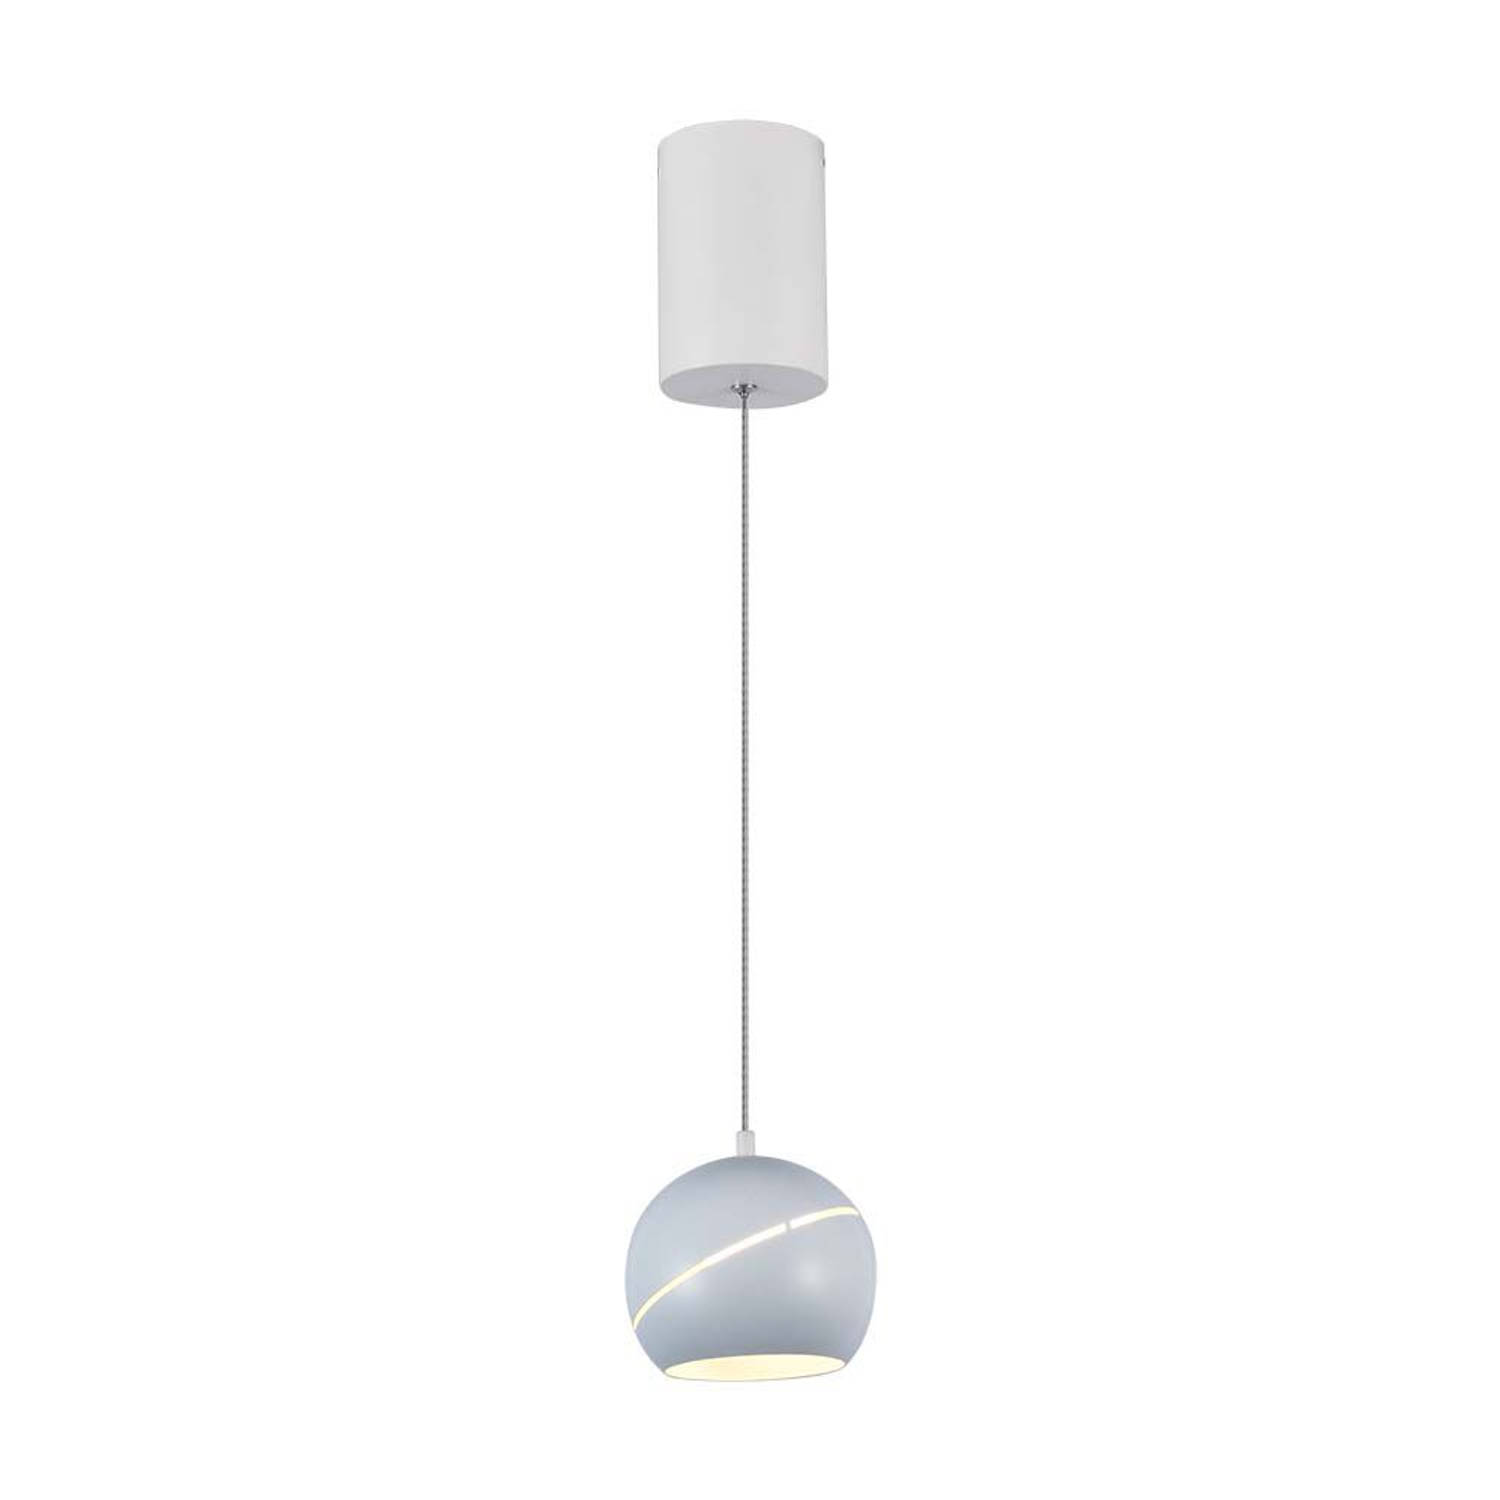 V-TAC VT-7797-W Designer plafondlampen - Designer hanglampen - IP20 - Witte behuizing - 8,5 watt - 850 lumen - 3000K